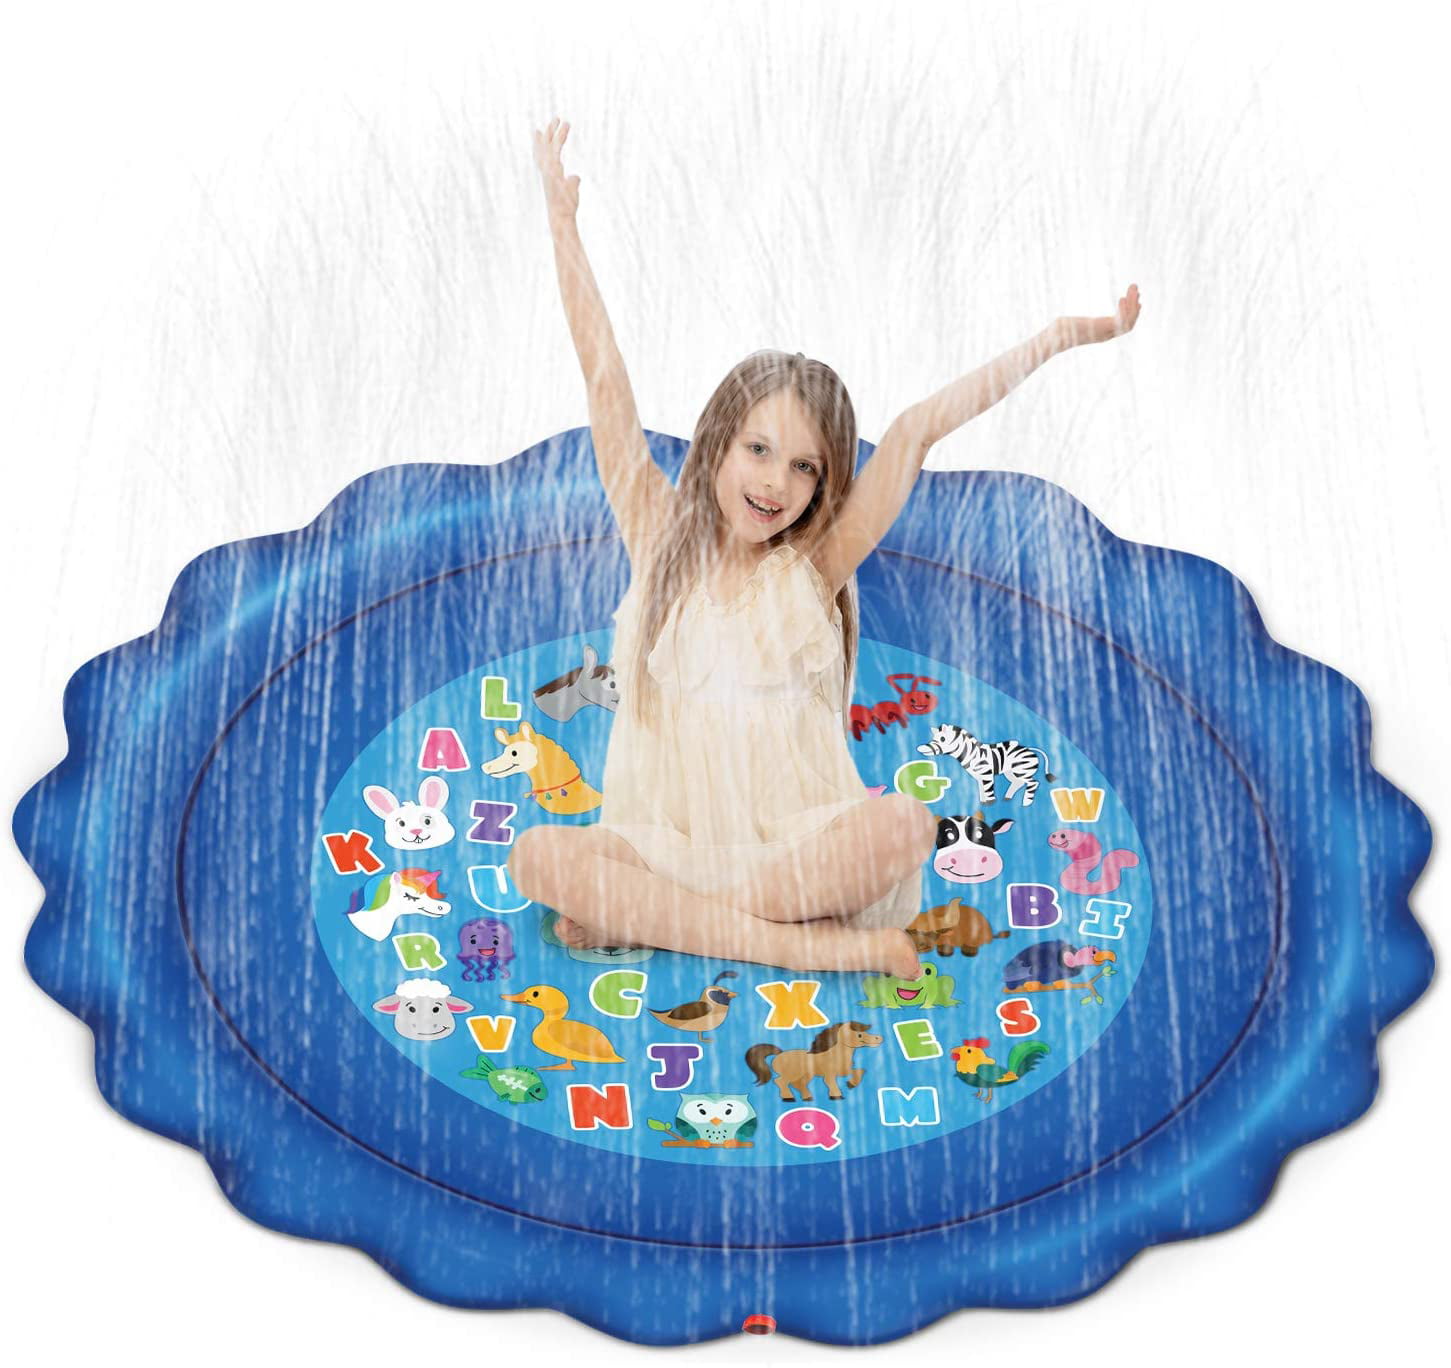 Details about   Sprinkler Play Water Mat Splash Pad Pool Garden Kids Children Spray Toy Outdoors 